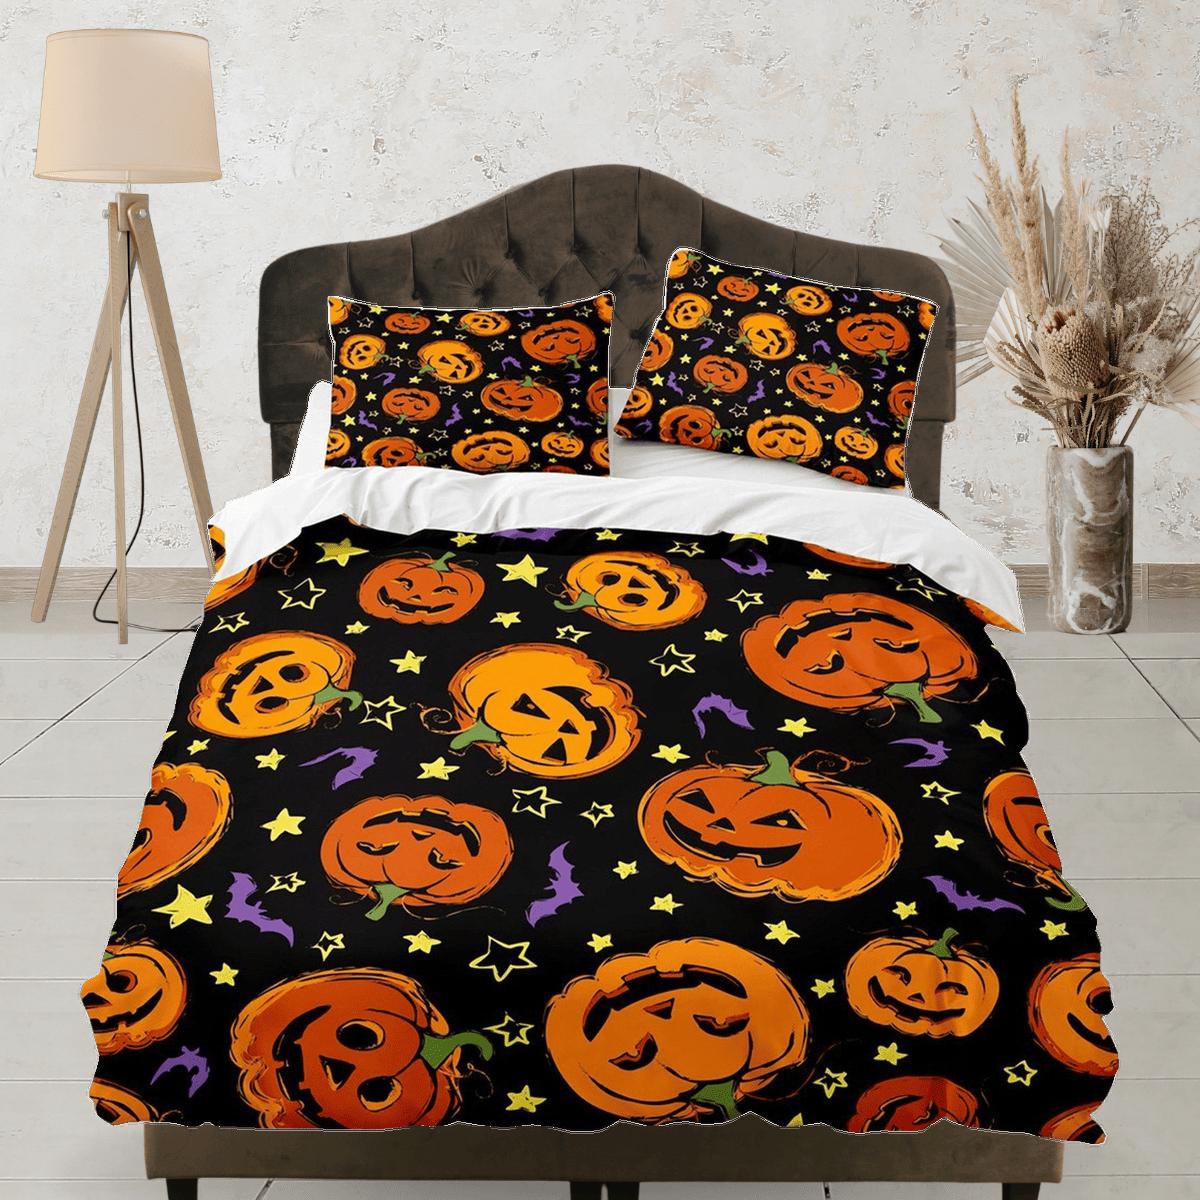 daintyduvet Retro halloween bedding & pillowcase, bat pumpkin duvet cover set dorm bedding, halloween decor, nursery toddler bedding, halloween gift